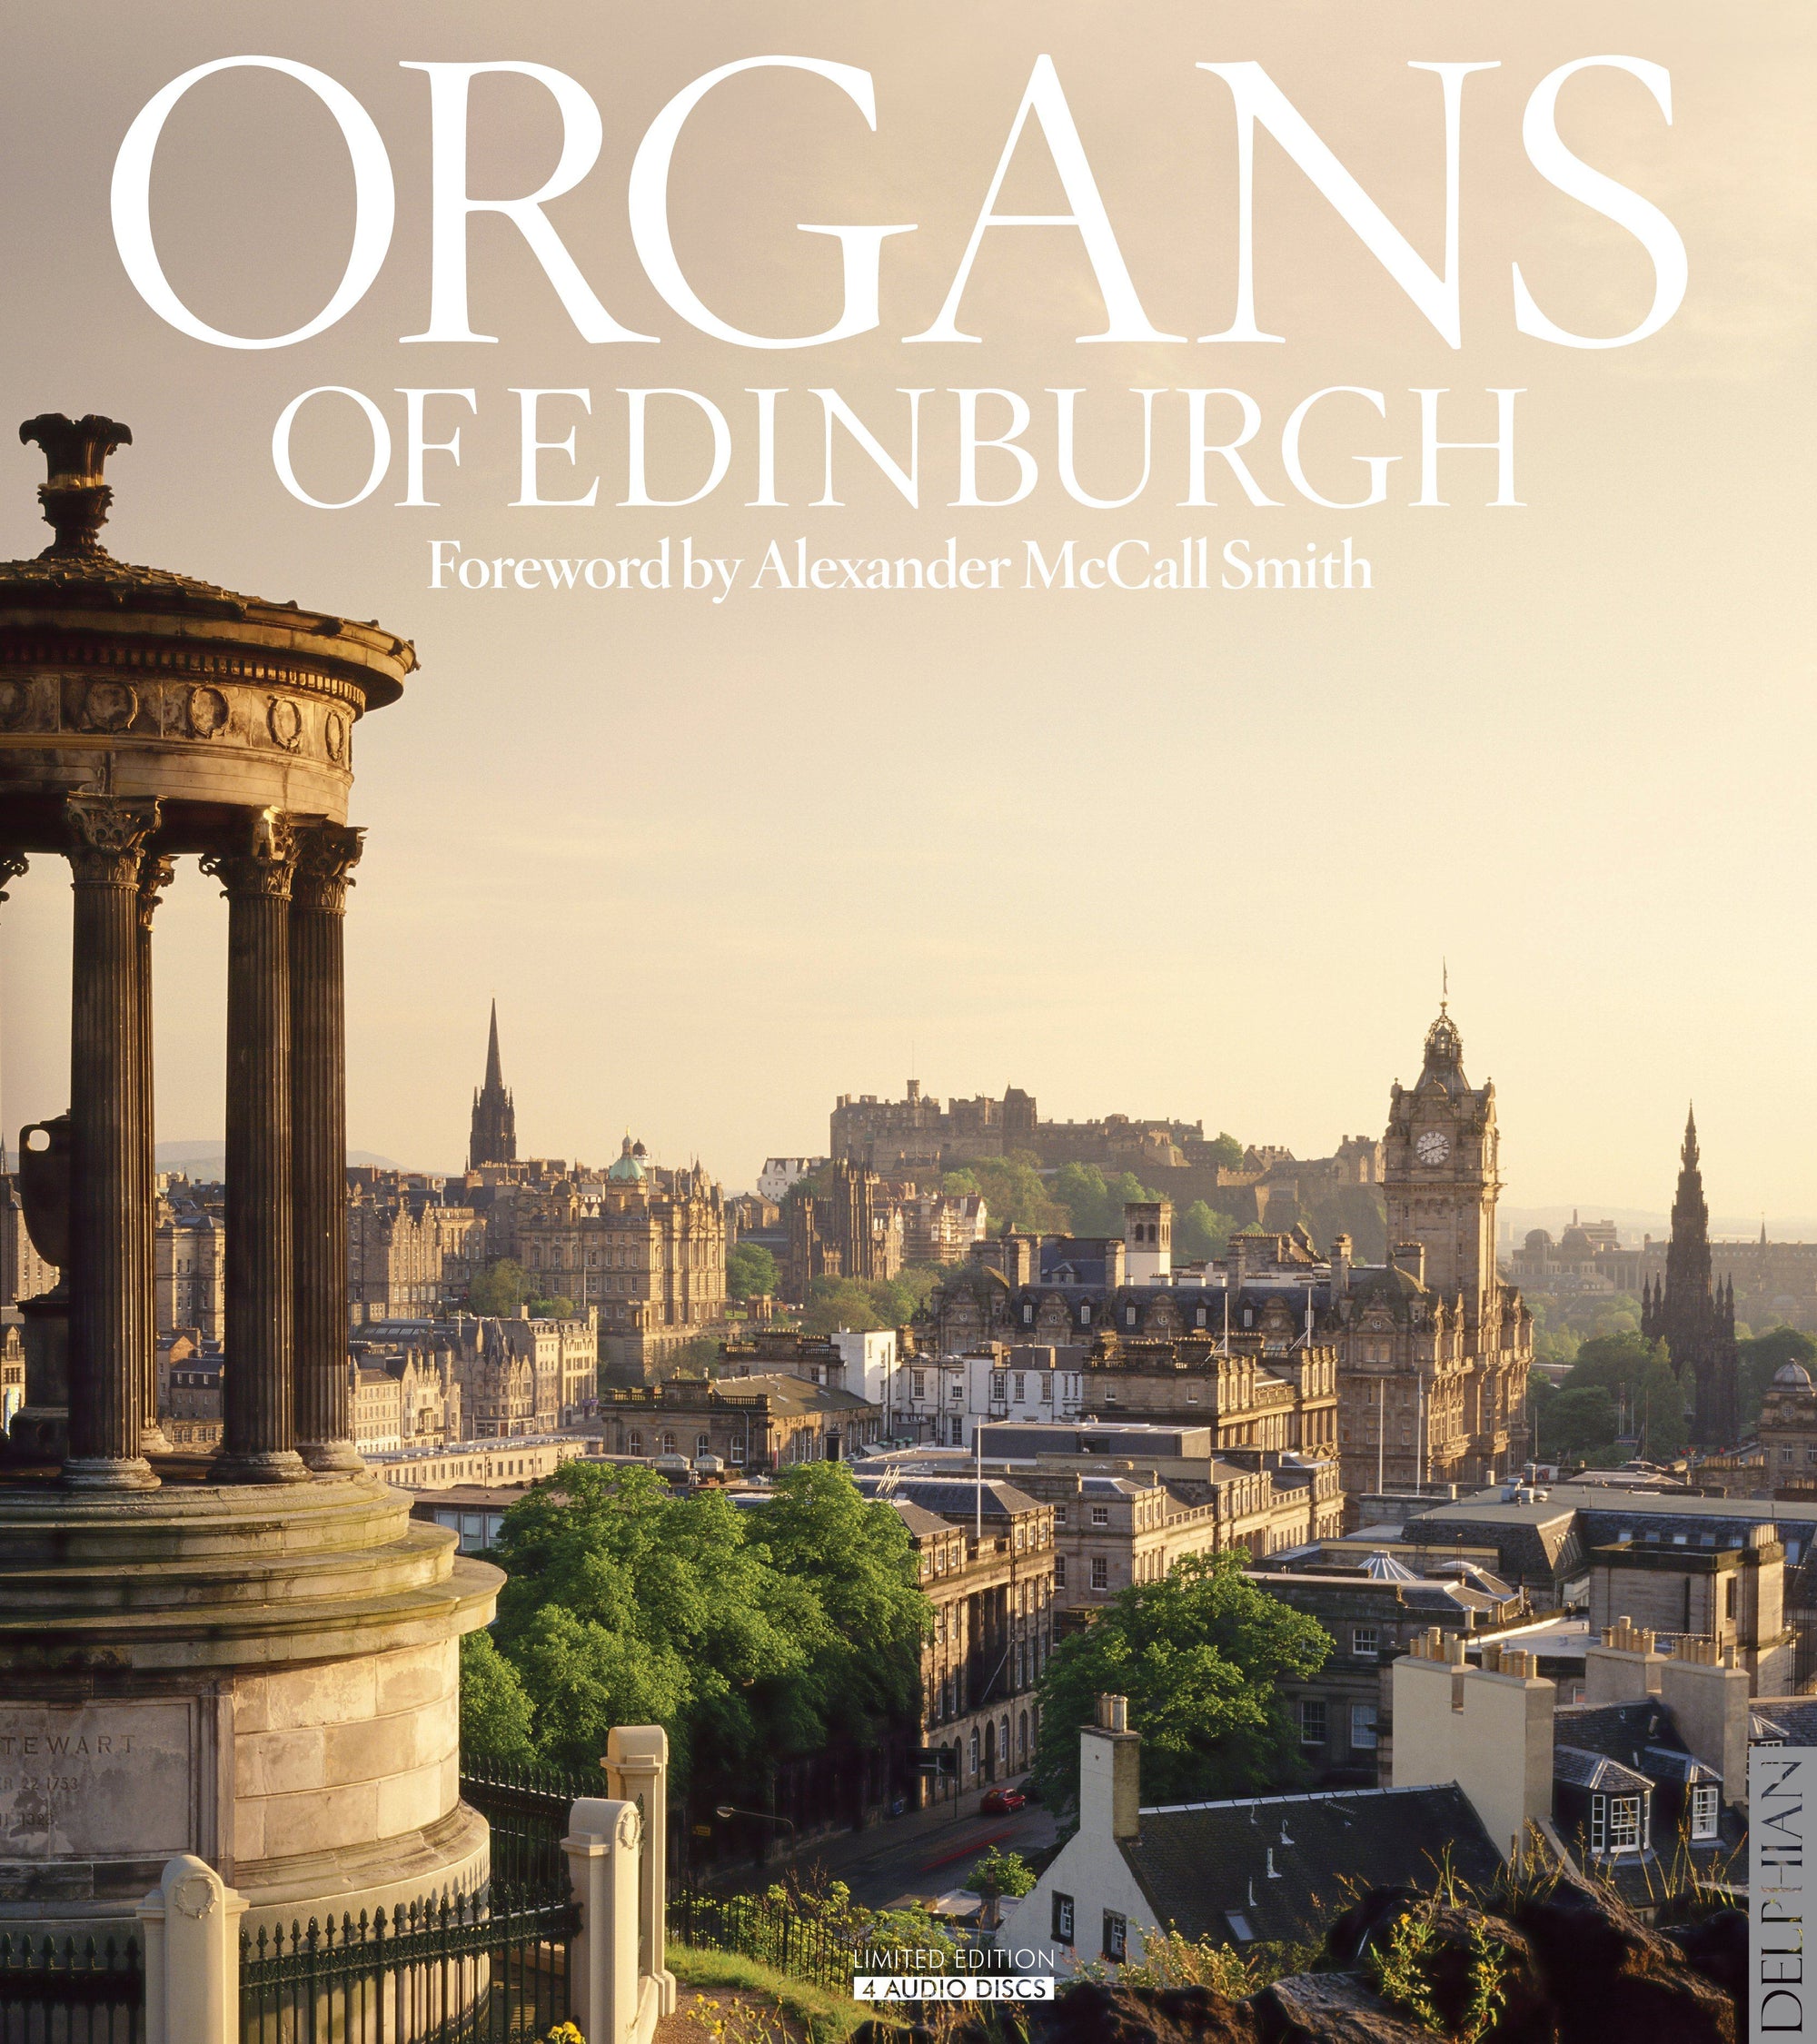 Organs of Edinburgh (4-CD Hardback Book) CD Delphian Records